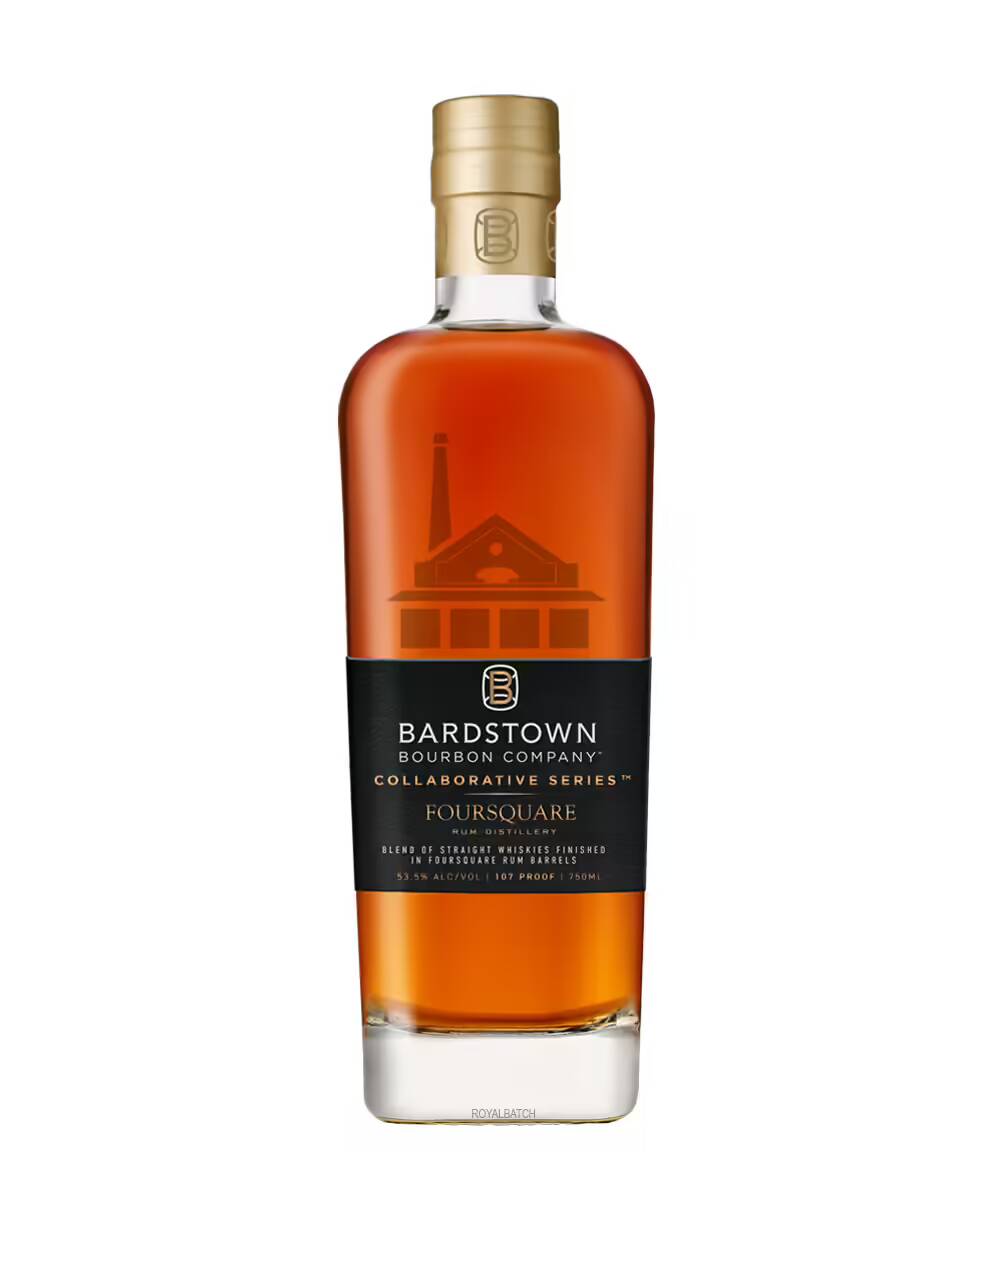 Bardstown Collaborative Series Foursquare Bourbon Whiskey